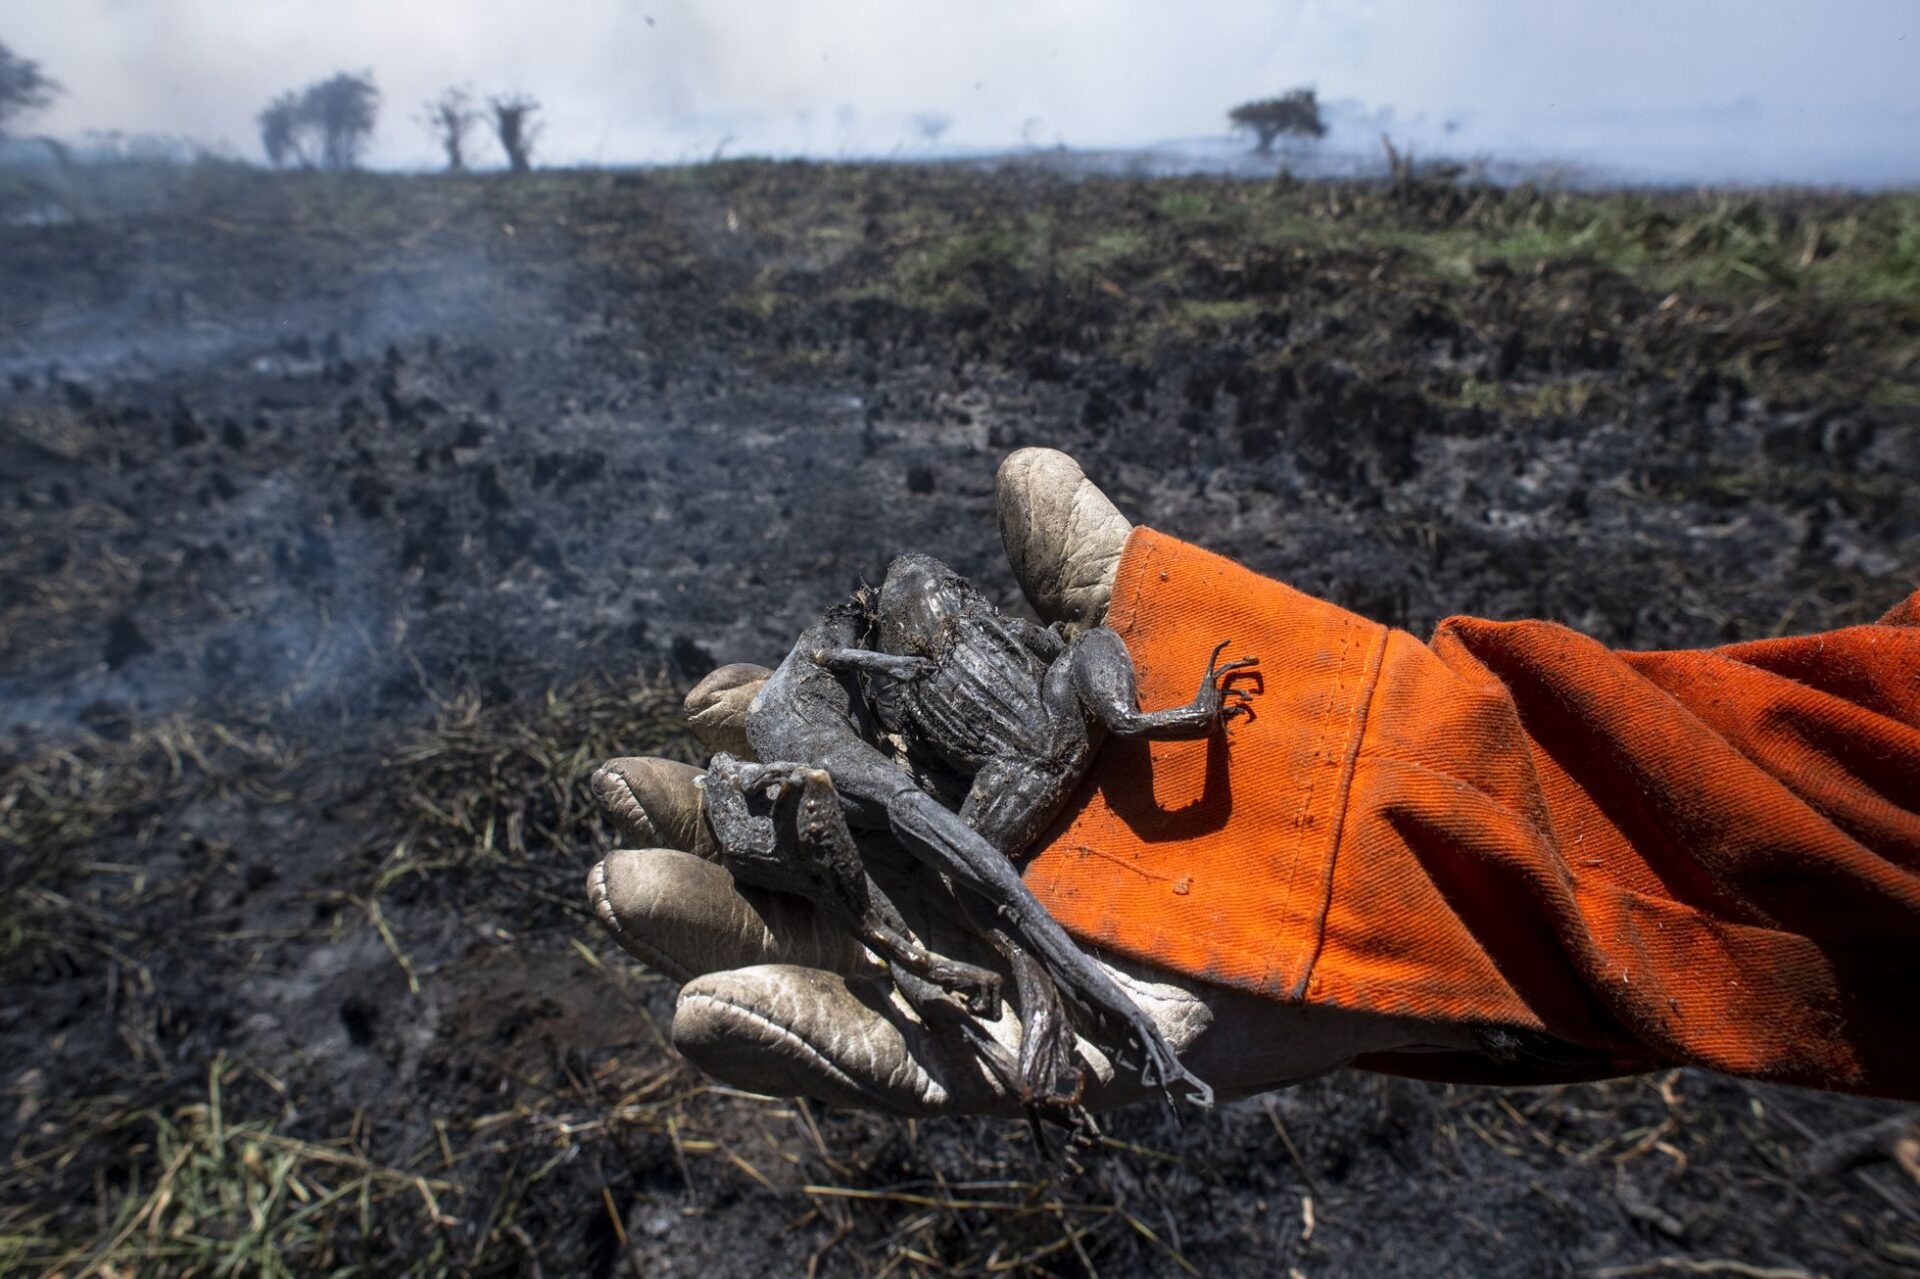 Os 46 hectares engolidos pelo fogo no Parque do Cocó, no Ceará. Foto: Davi Pinheiro/El País